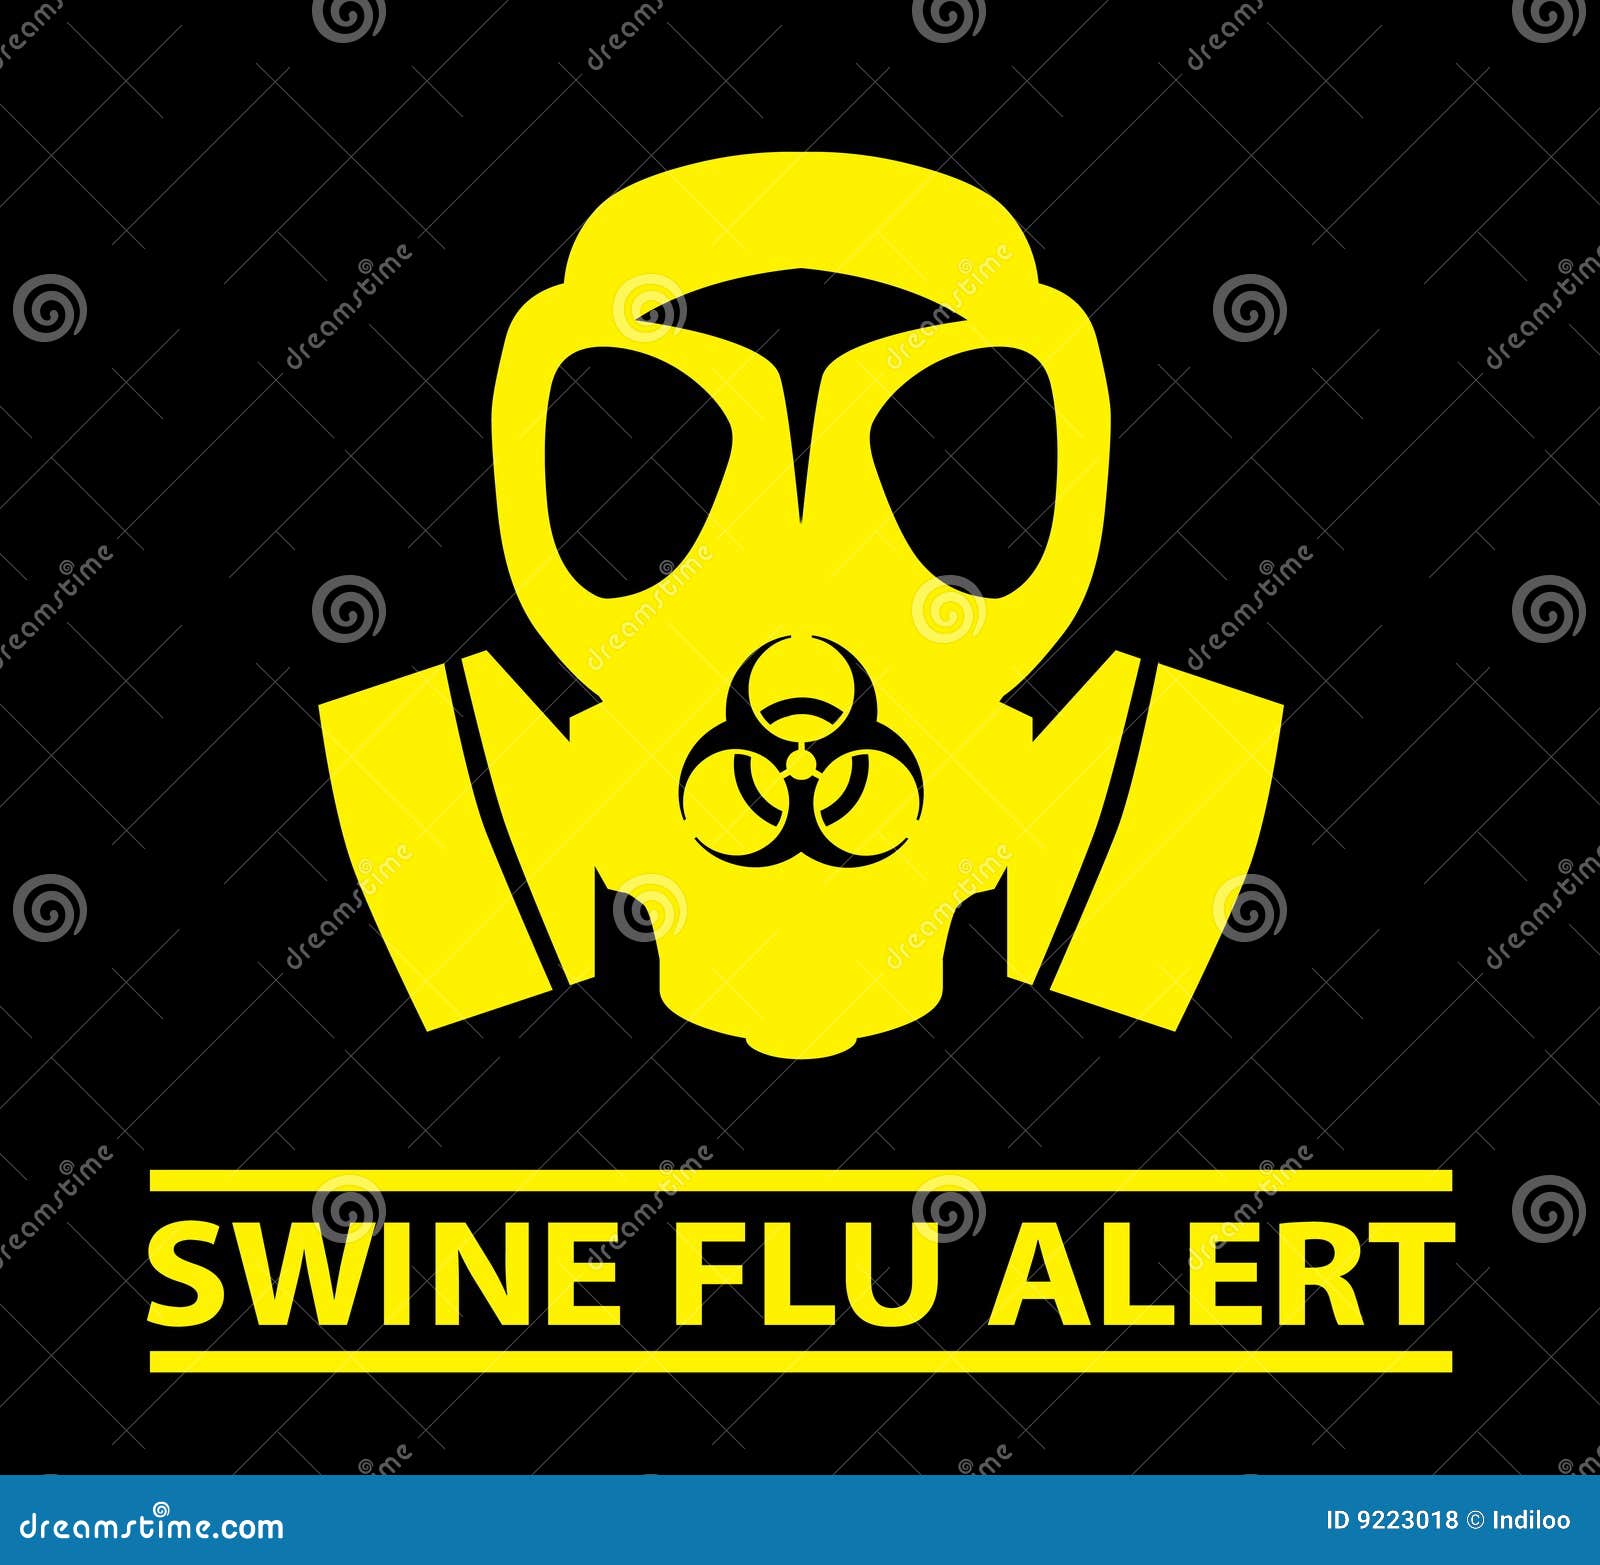 swine flu alert 